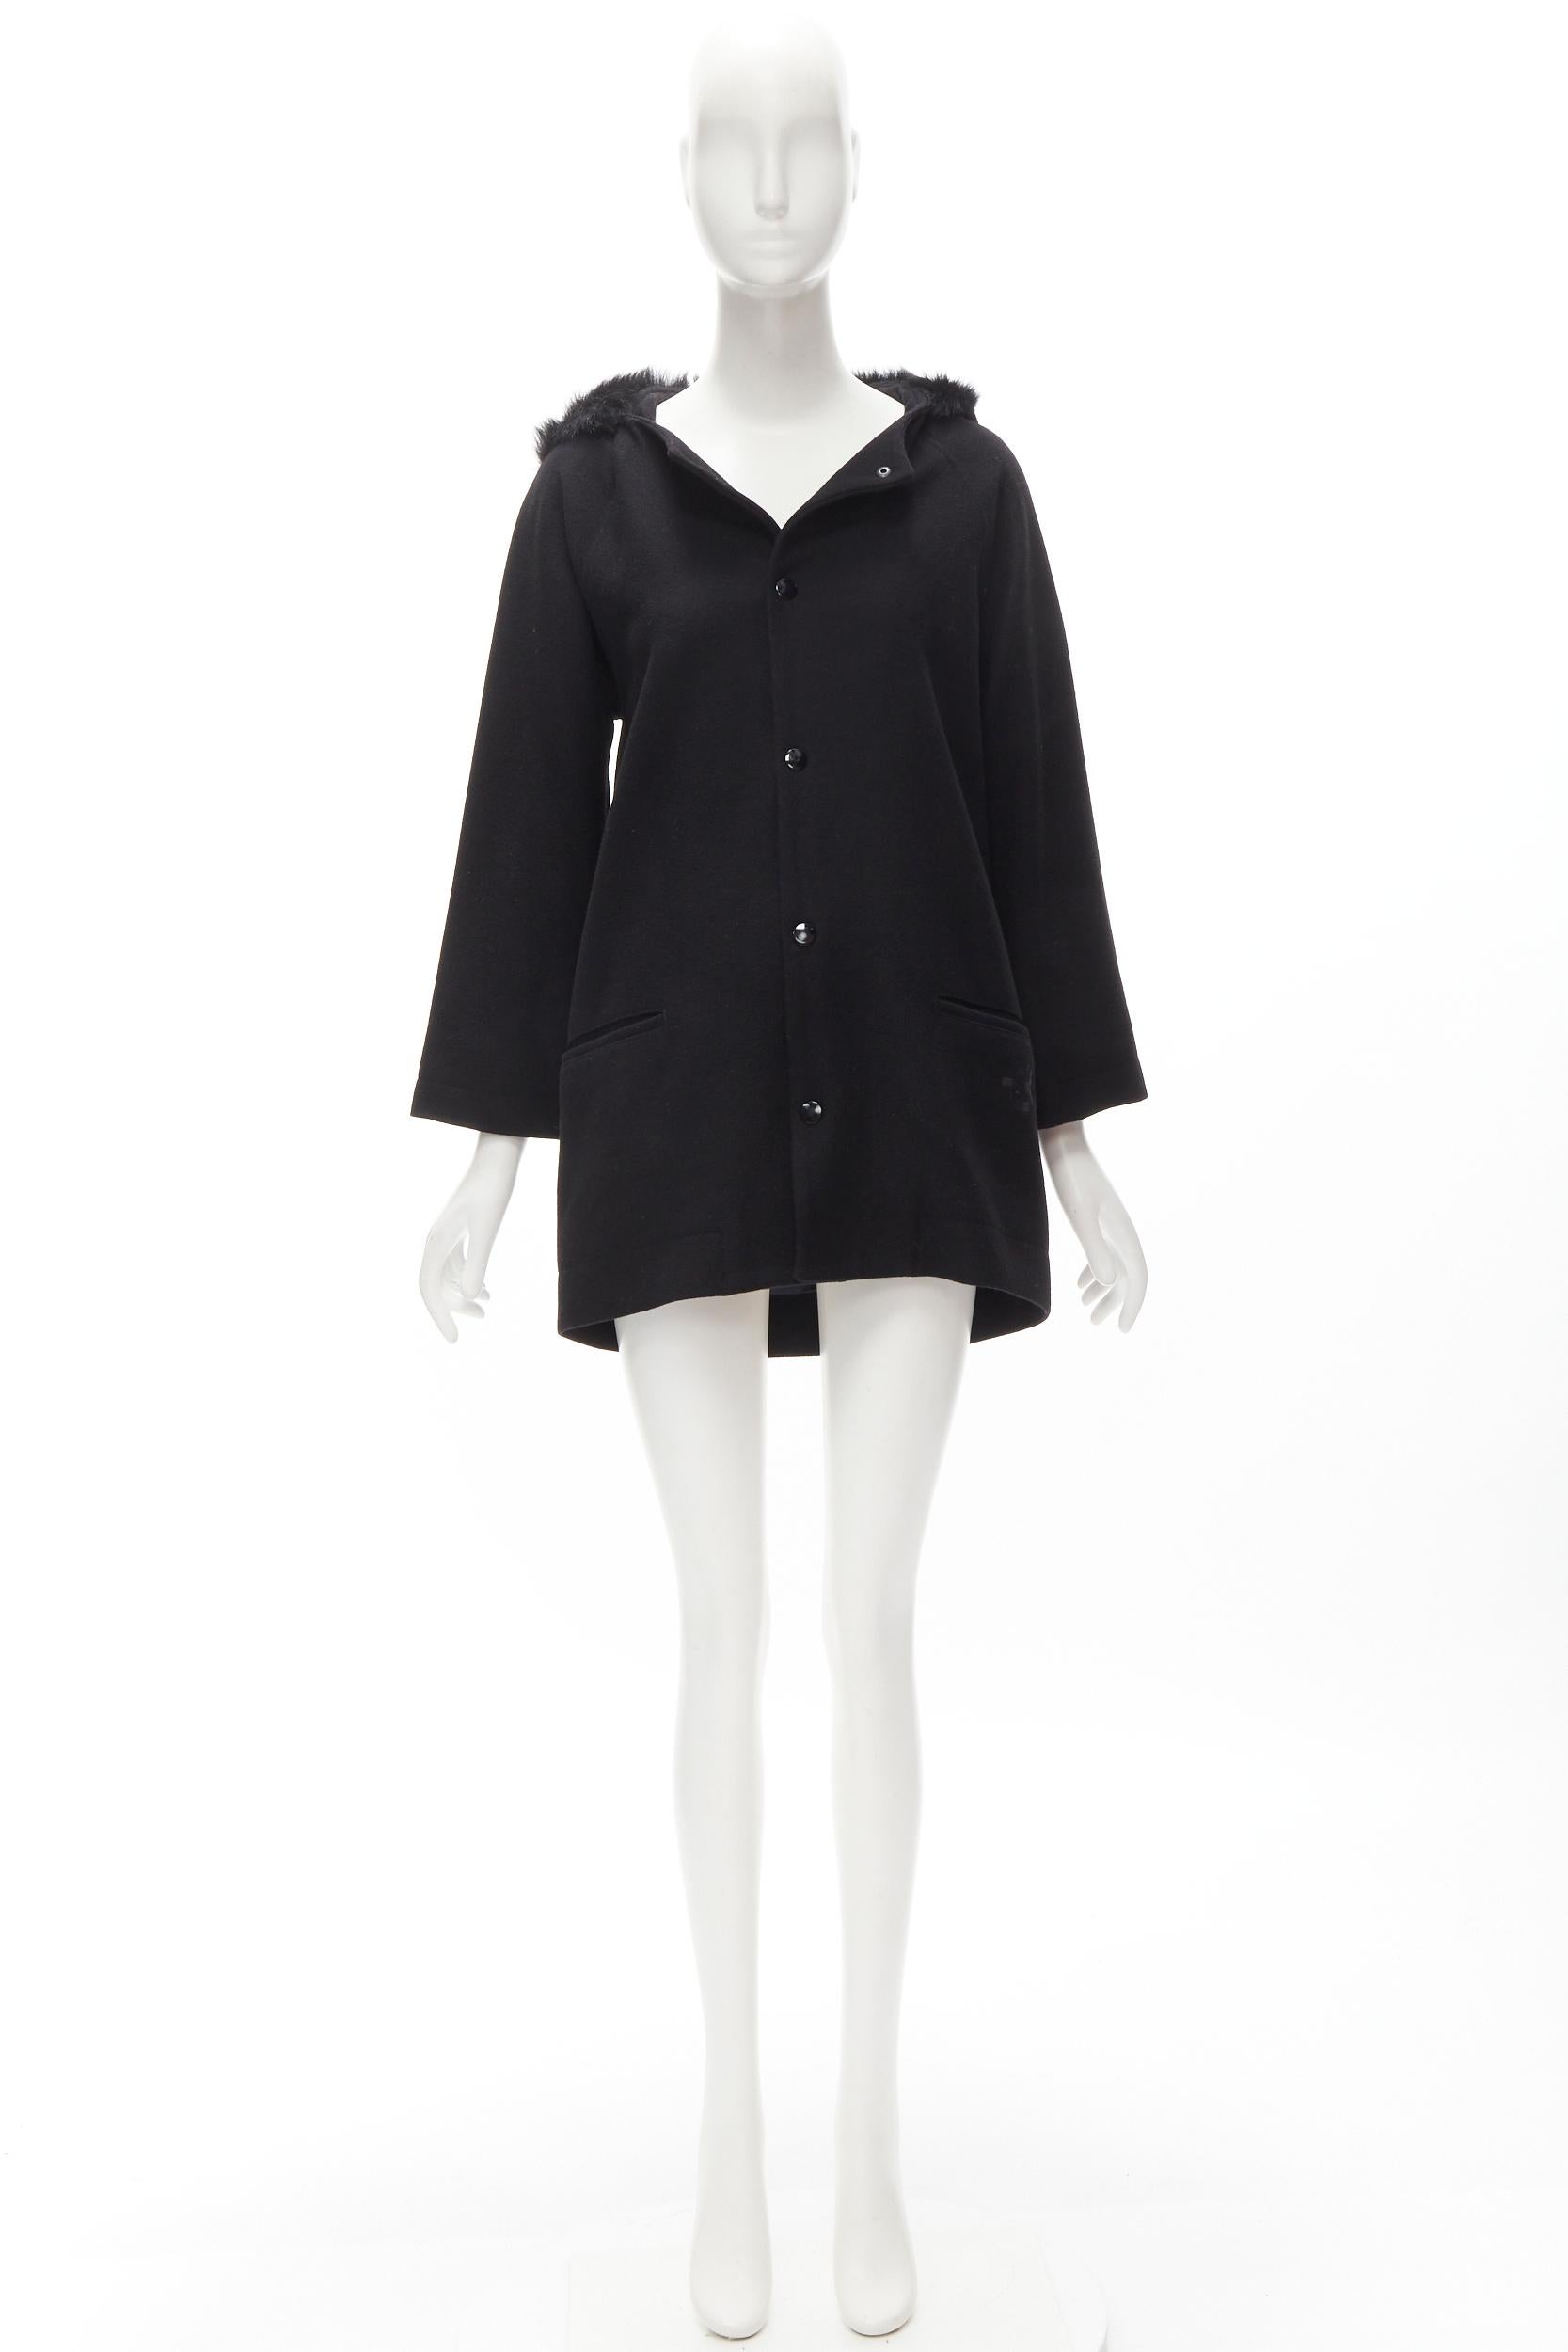 Y3 YOHJI YAMAMOTO ADIDAS black wool fur lined hood cocoon coat XS For Sale 6